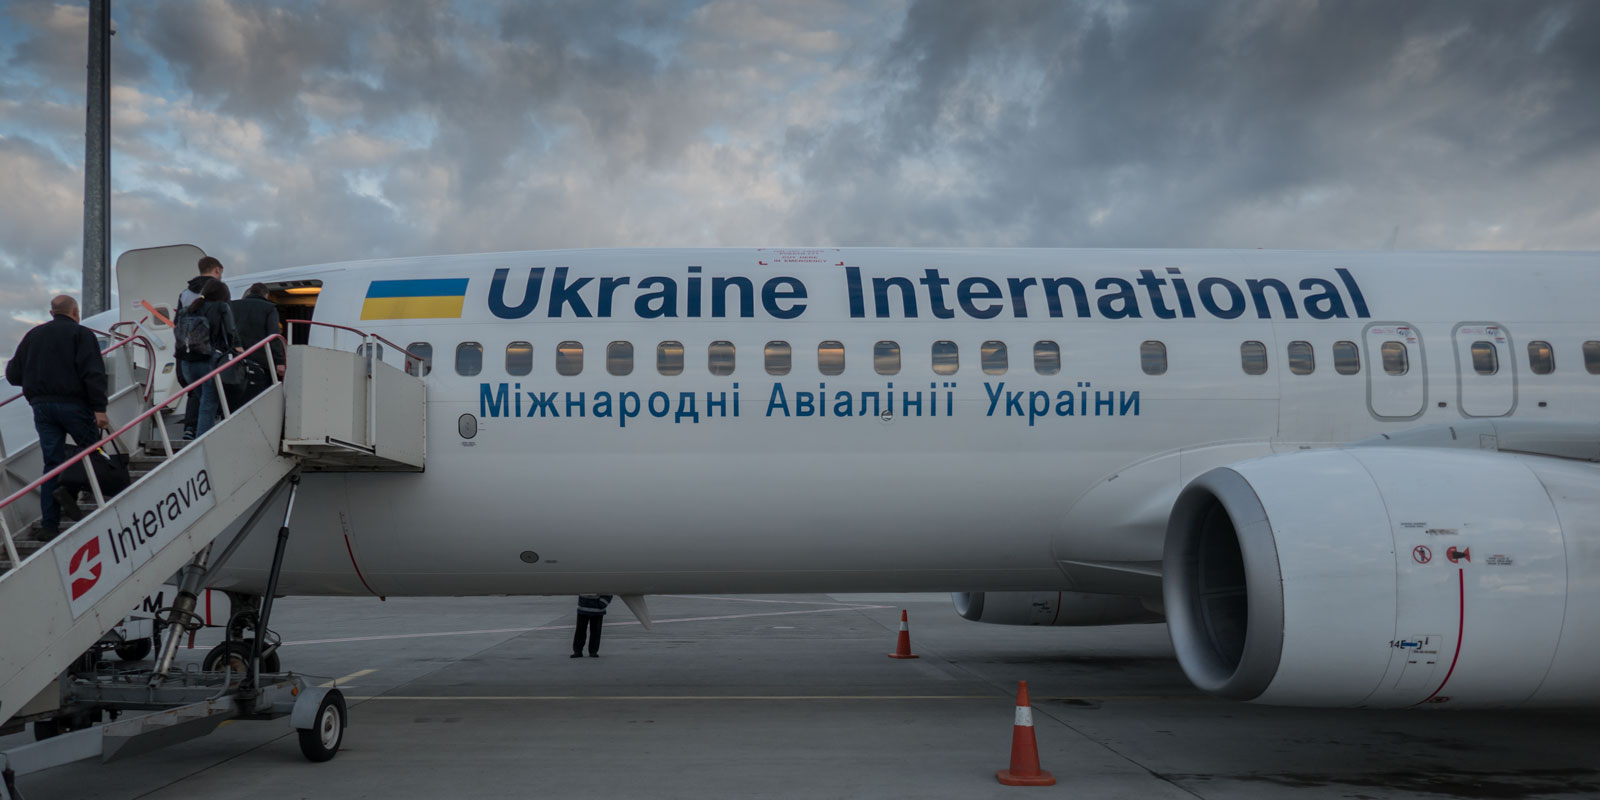 Ukraine International 